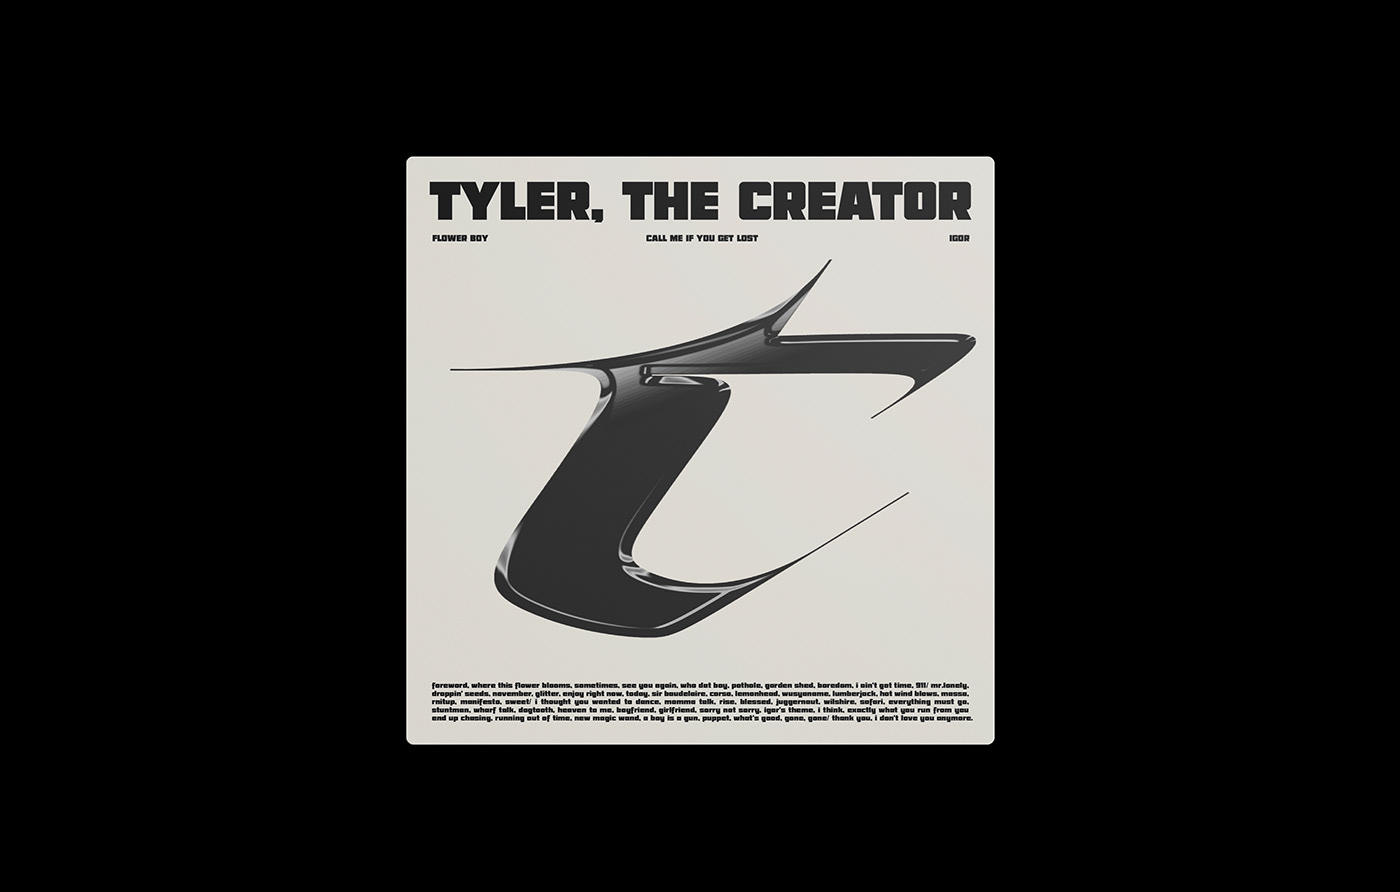 music vinyl Calligraphy   graphic design  tyler the creator poster vinyl record ILLUSTRATION  Digital Art  songs cover art